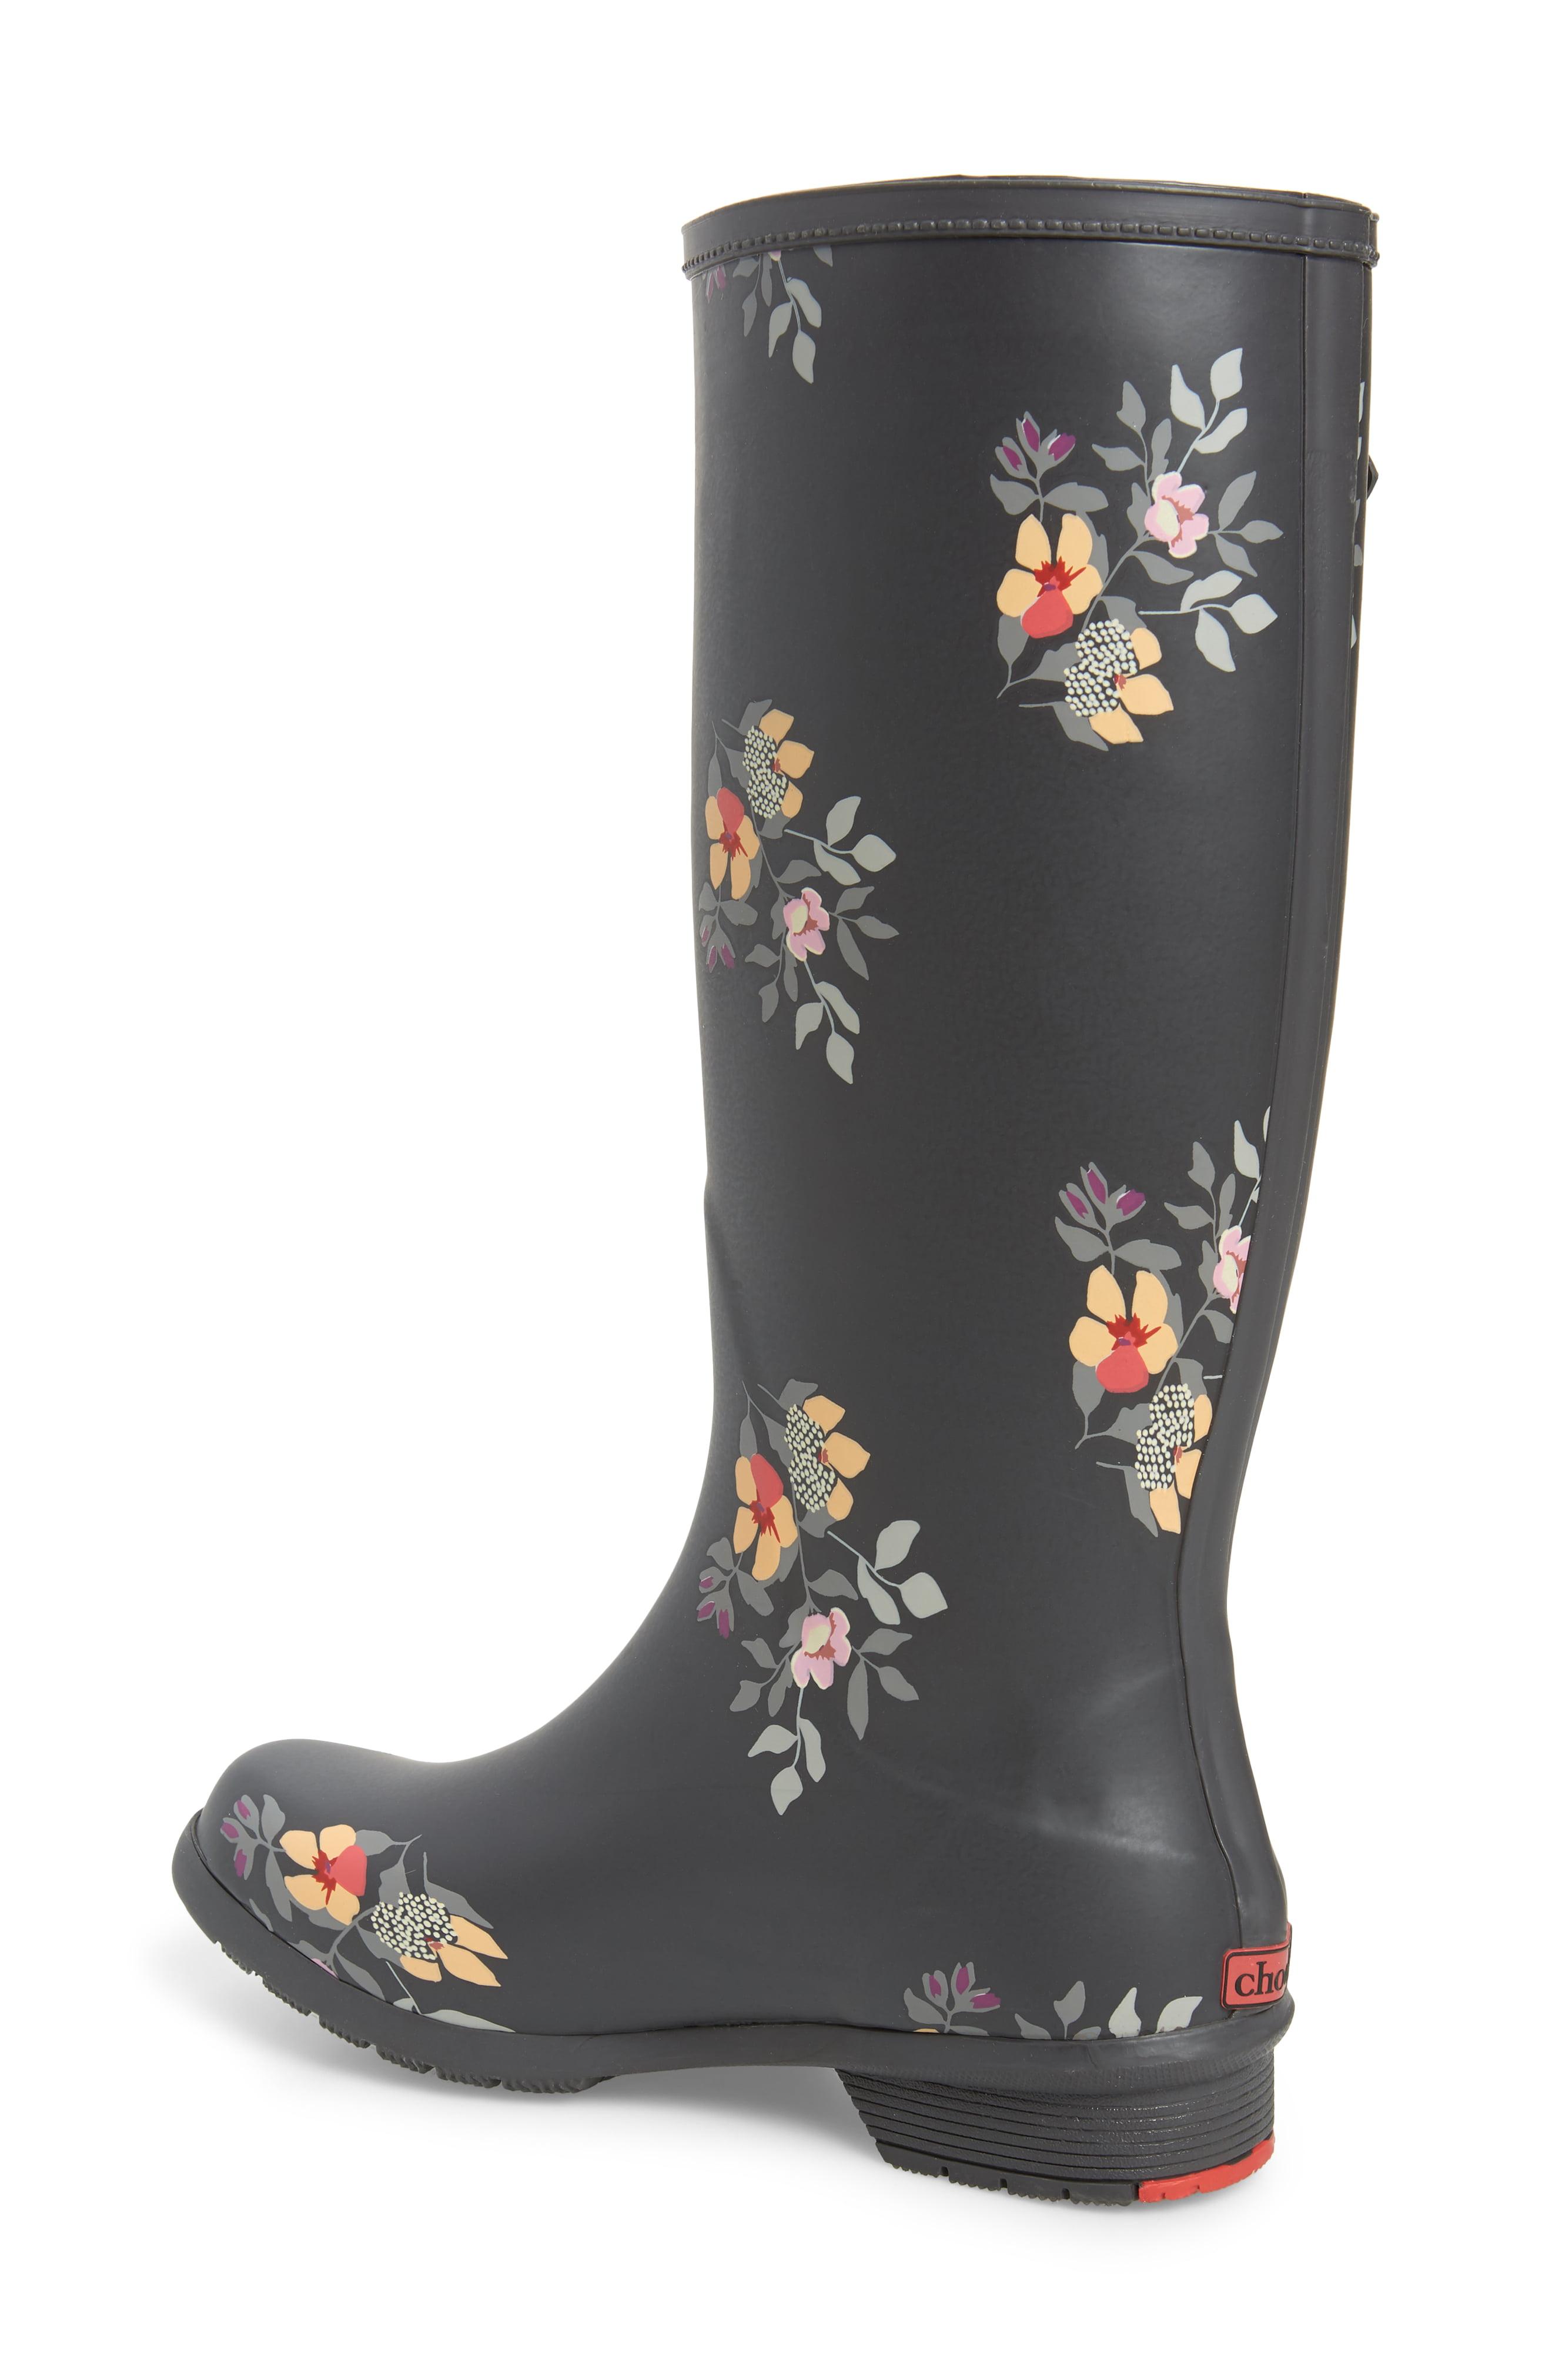 Lyst - Chooka Bailey Tall Waterproof Rain Boot in Black